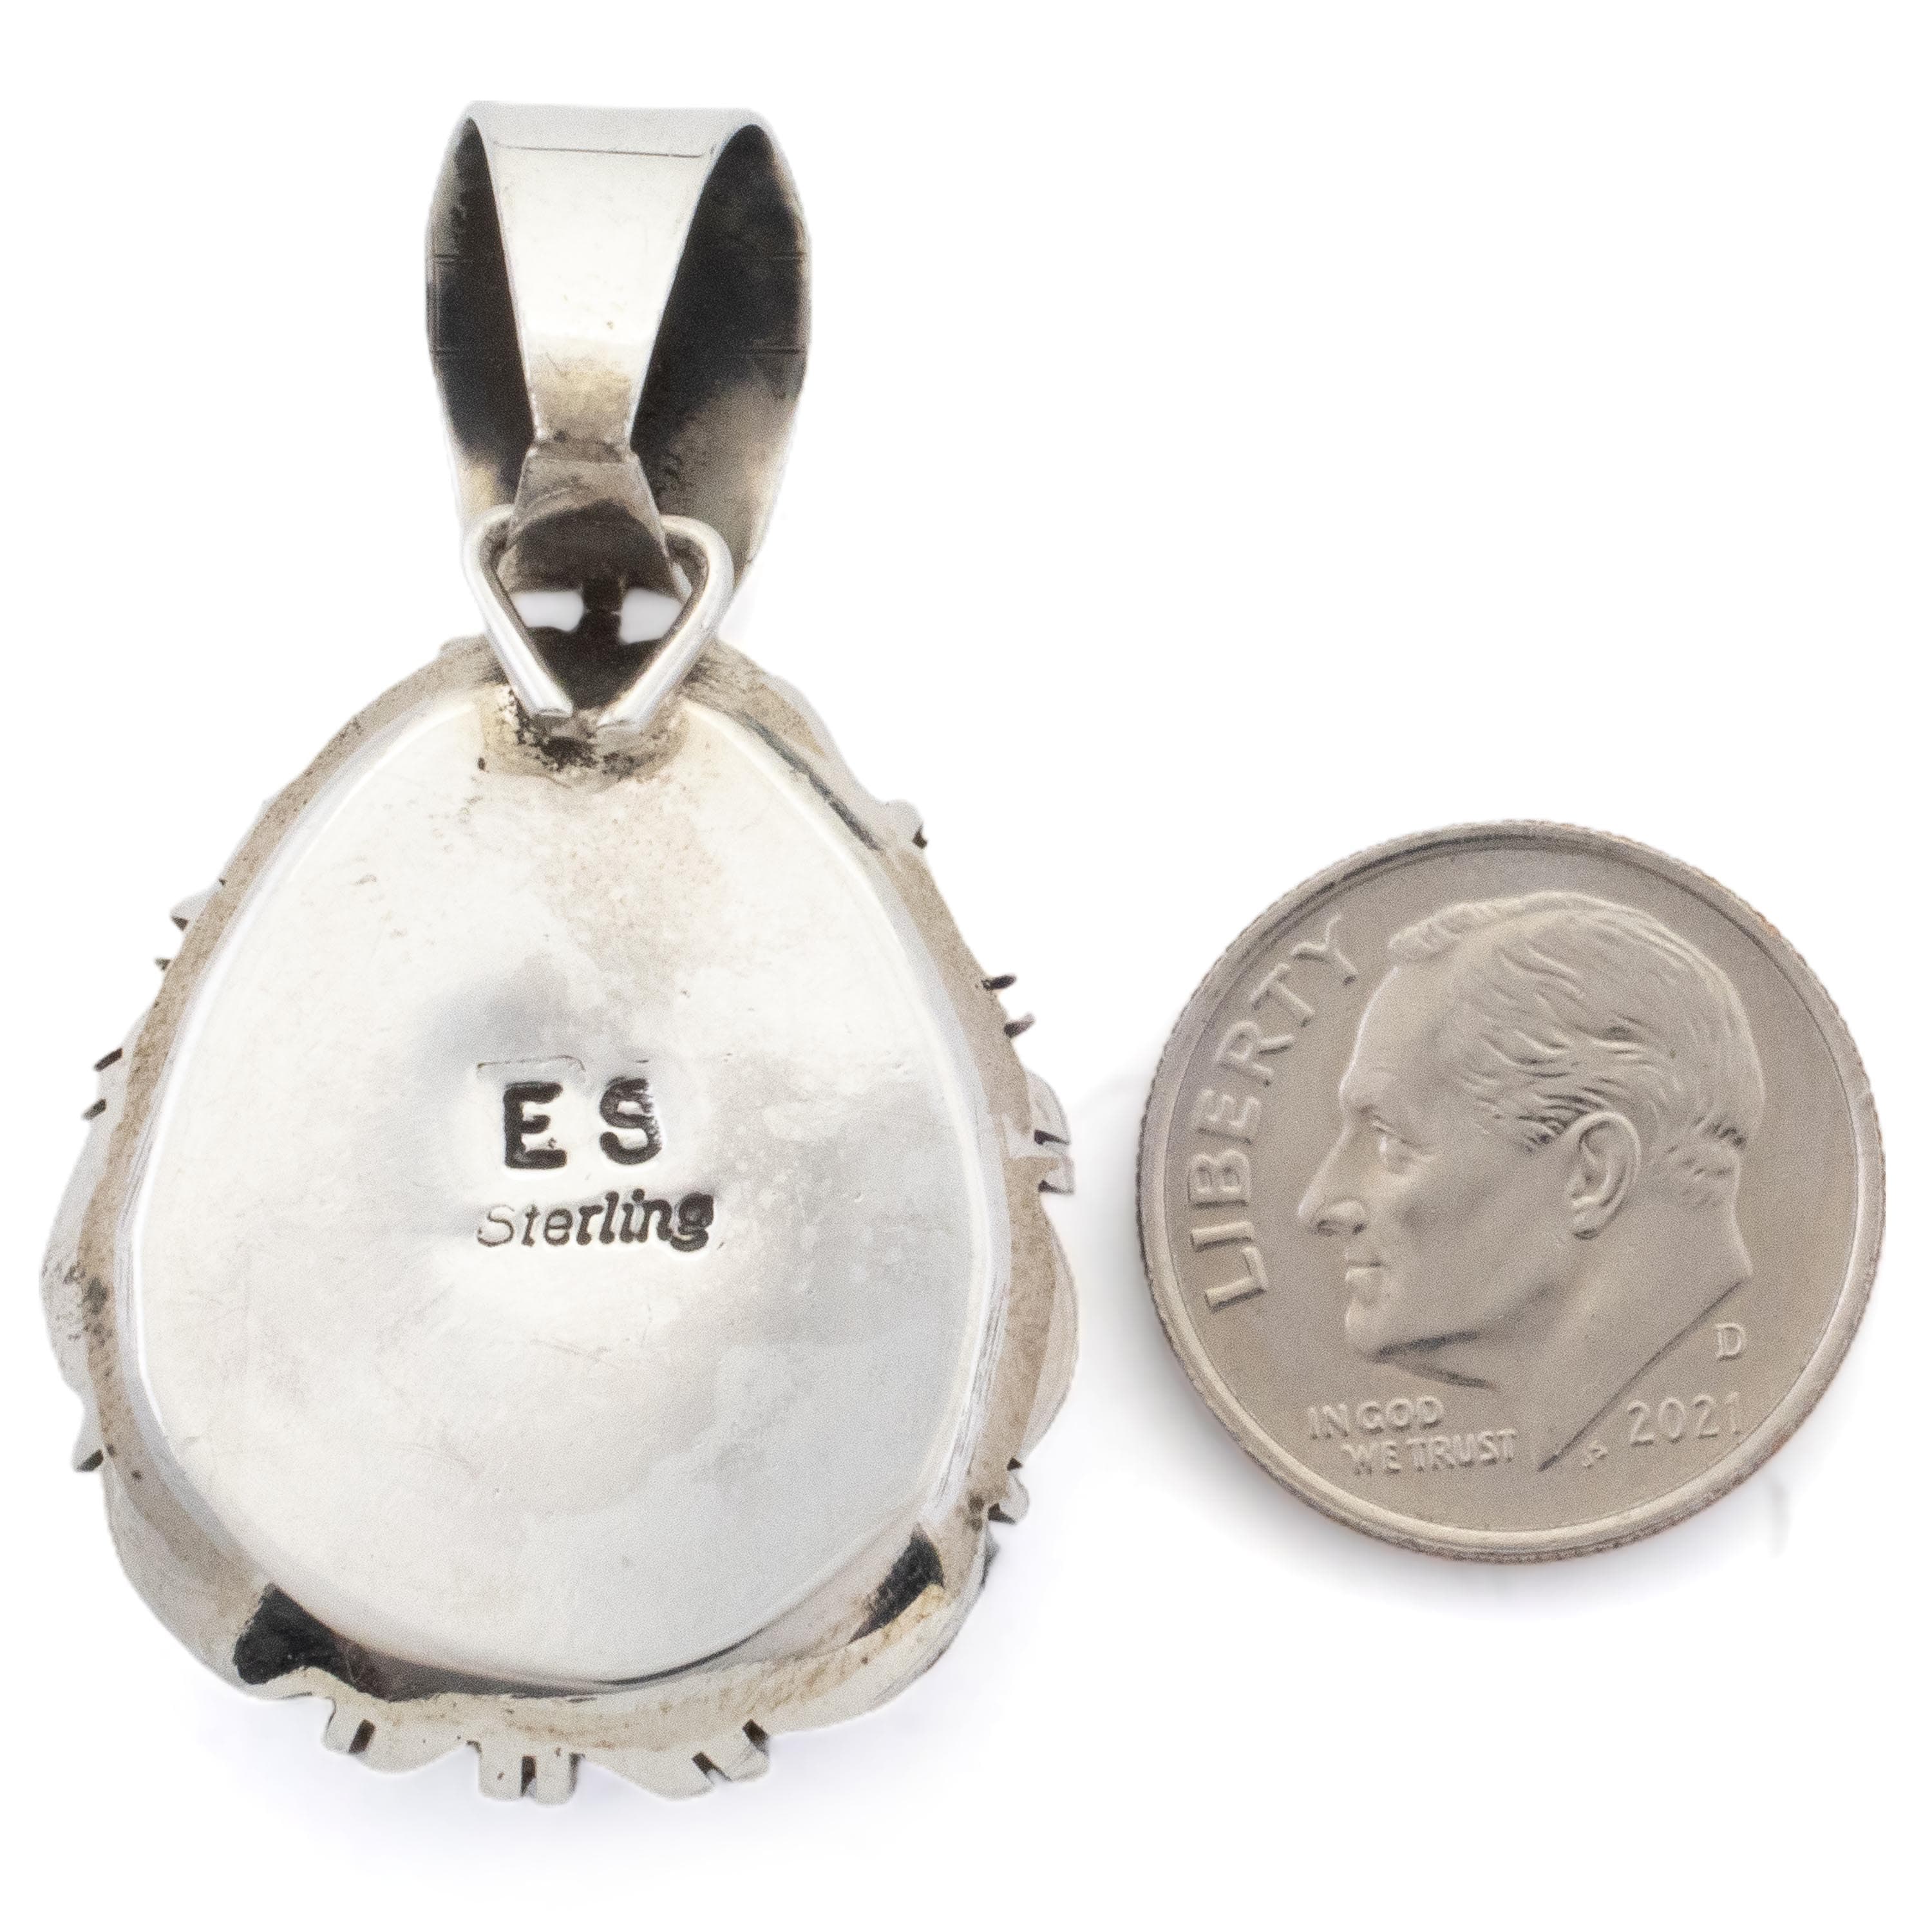 Kalifano Native American Jewelry Eddie Secatero Navajo Agerite USA Native American Made 925 Sterling Silver Pendant NAN600.021